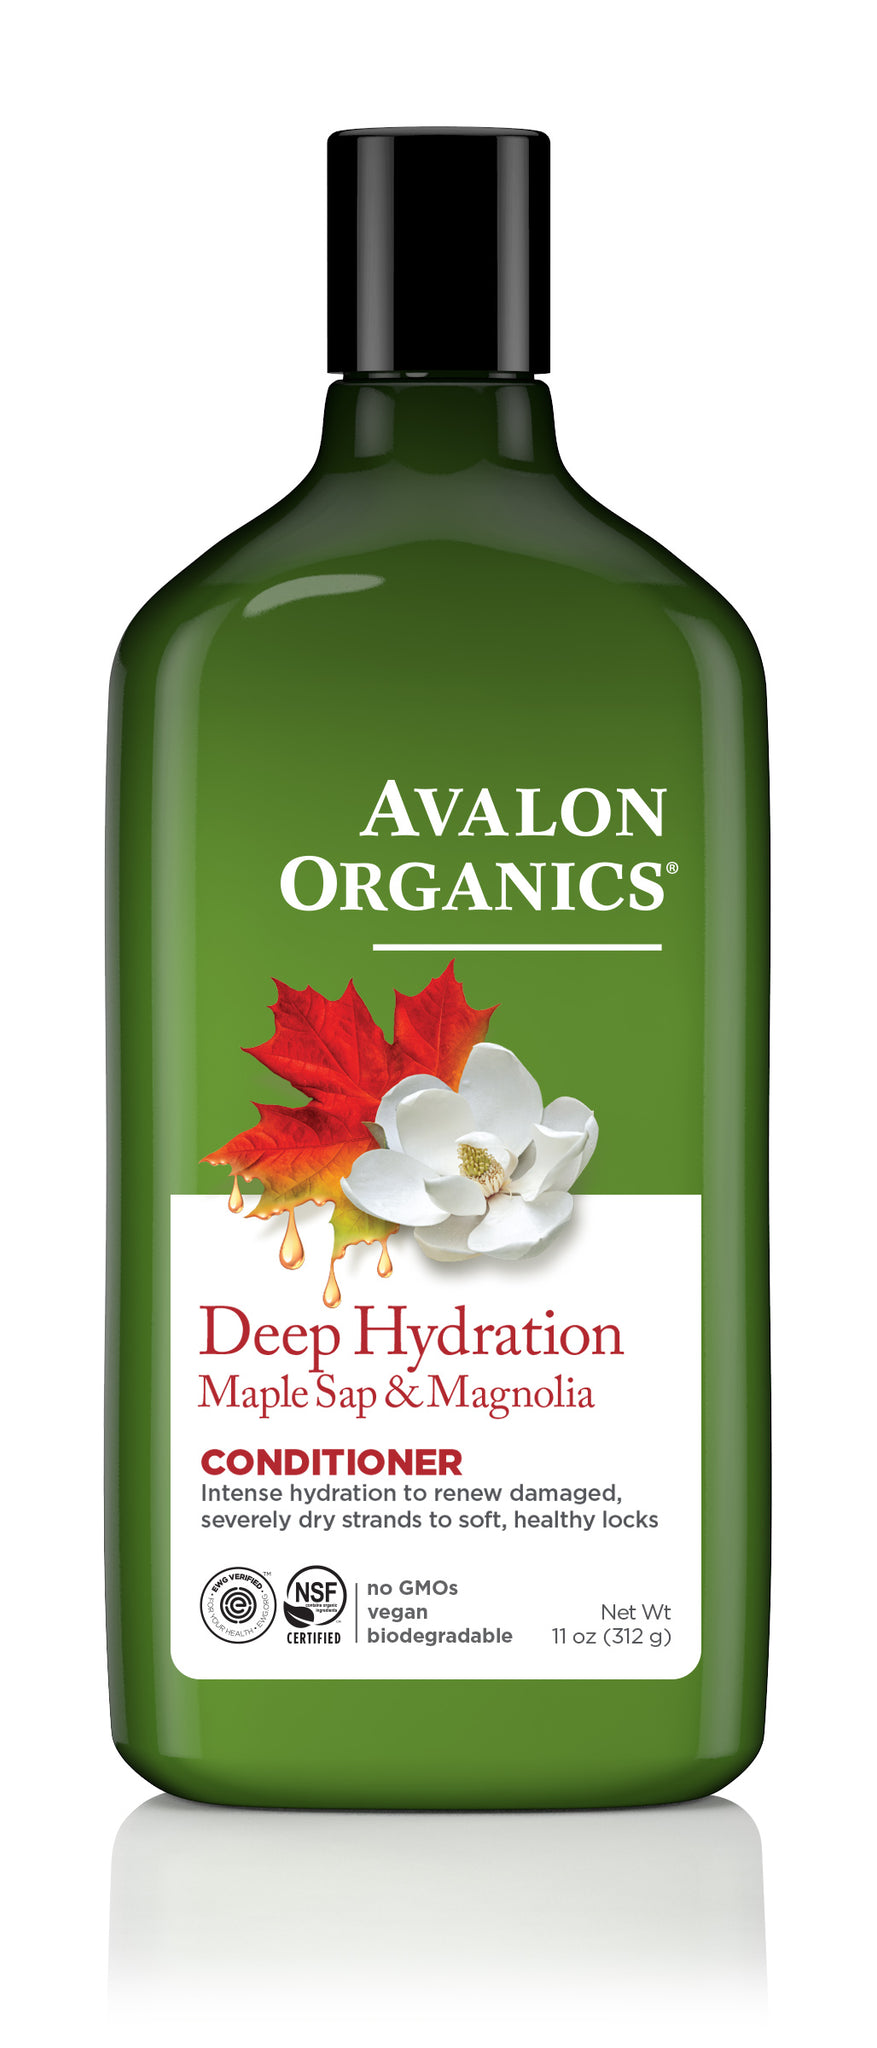 Avalon Organics Deep Hydration Maple Sap & Magnolia Conditioner